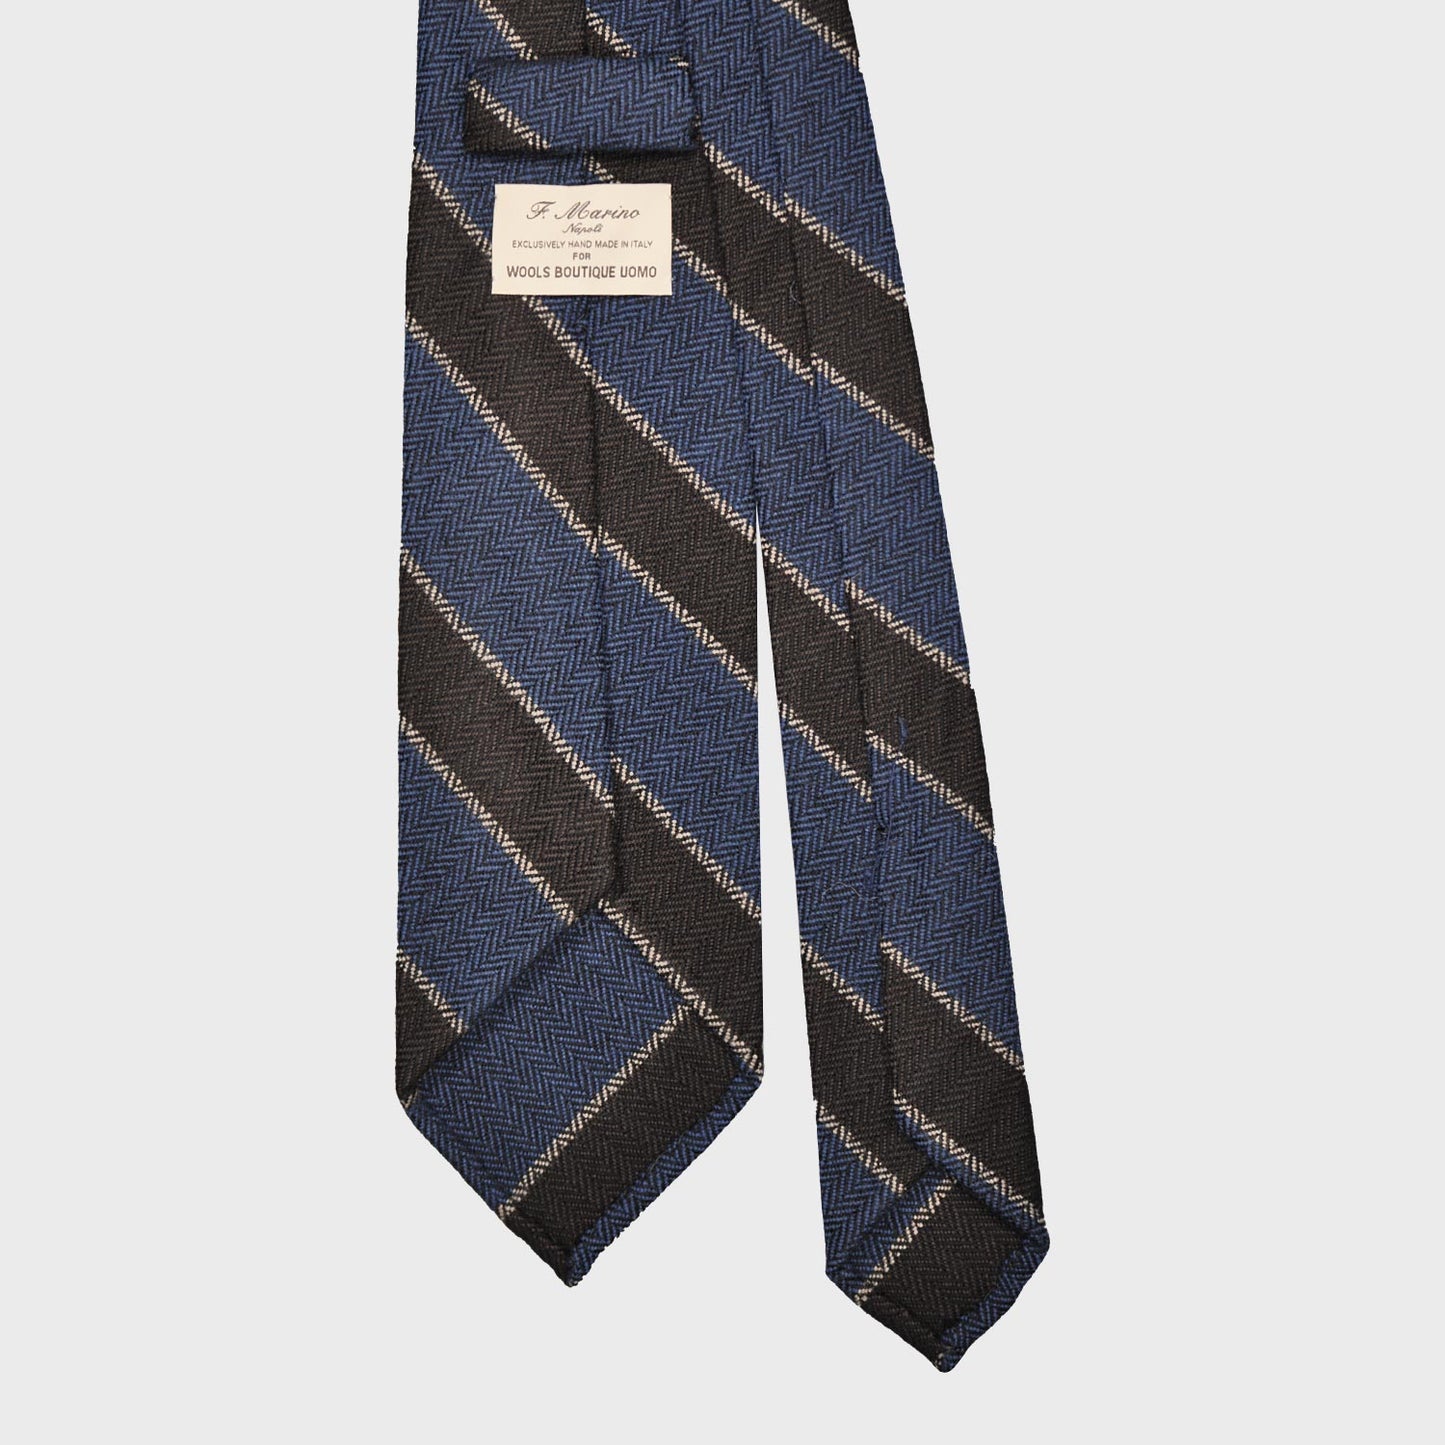 F.Marino Herringbone Regimental Wool Tie 3 Folds Denim Blue-Wools Boutique Uomo